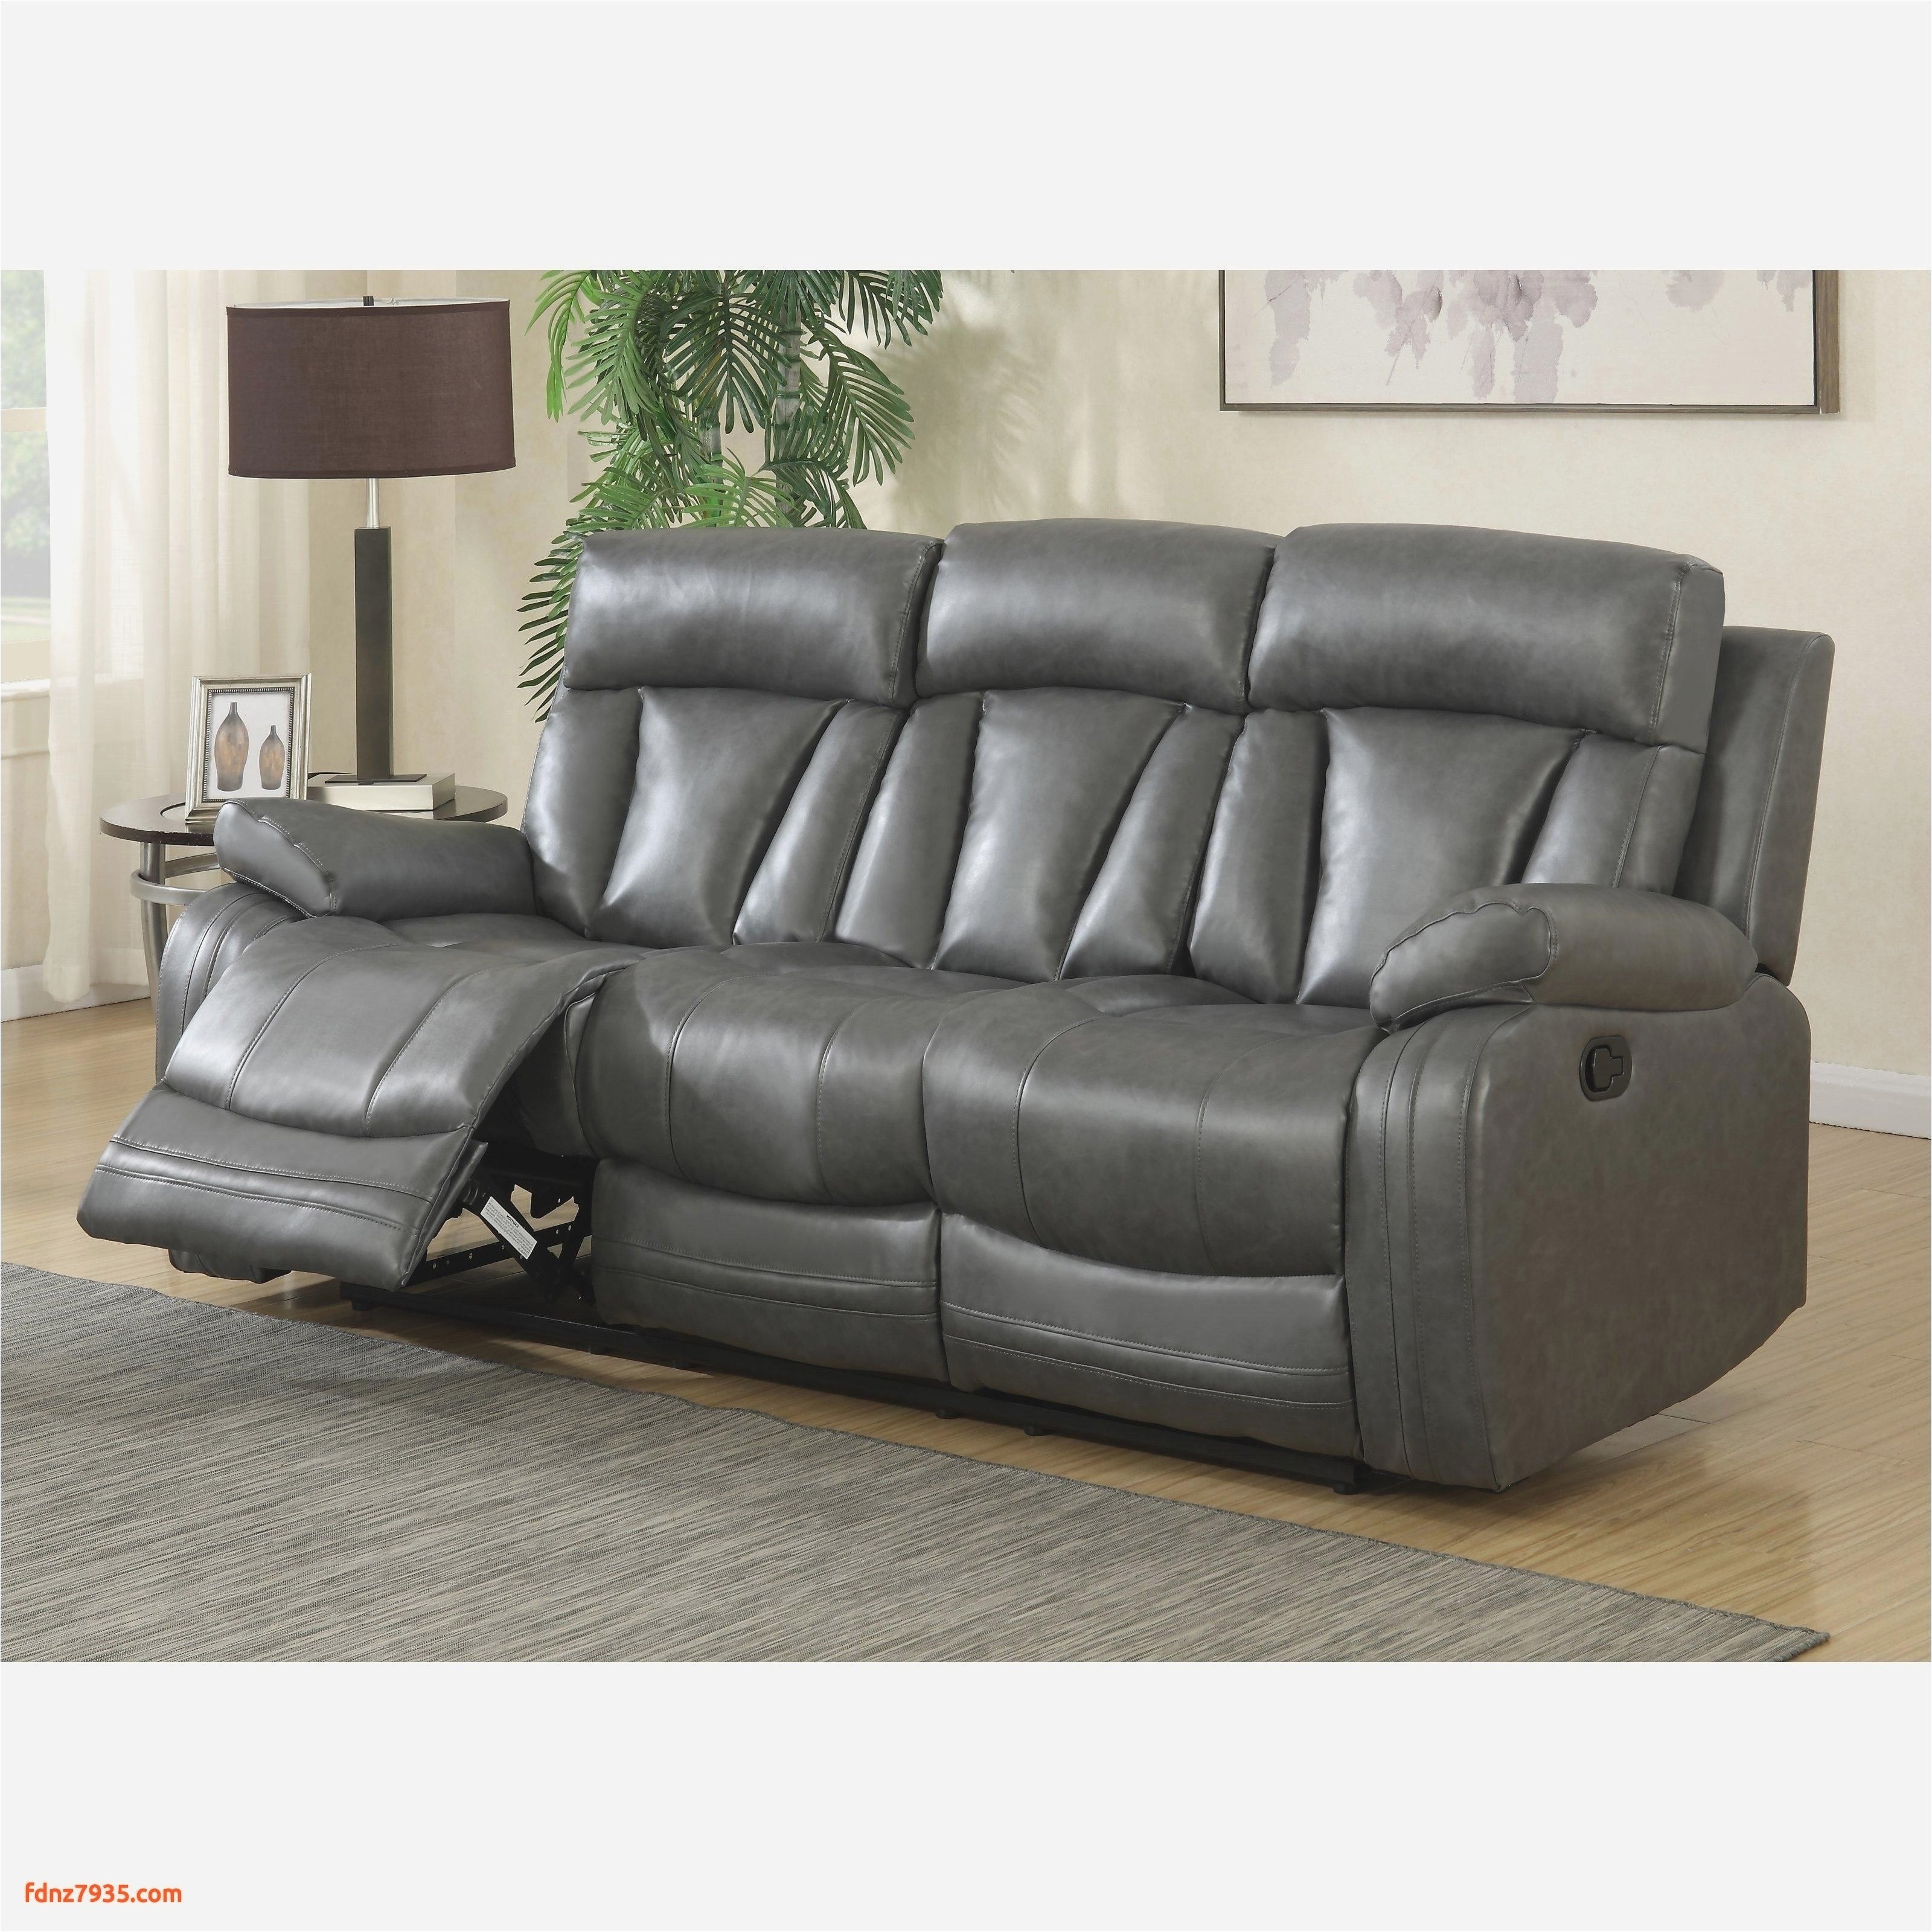 grey living room furniture sets new leather sofa sets for living room fresh sofa design